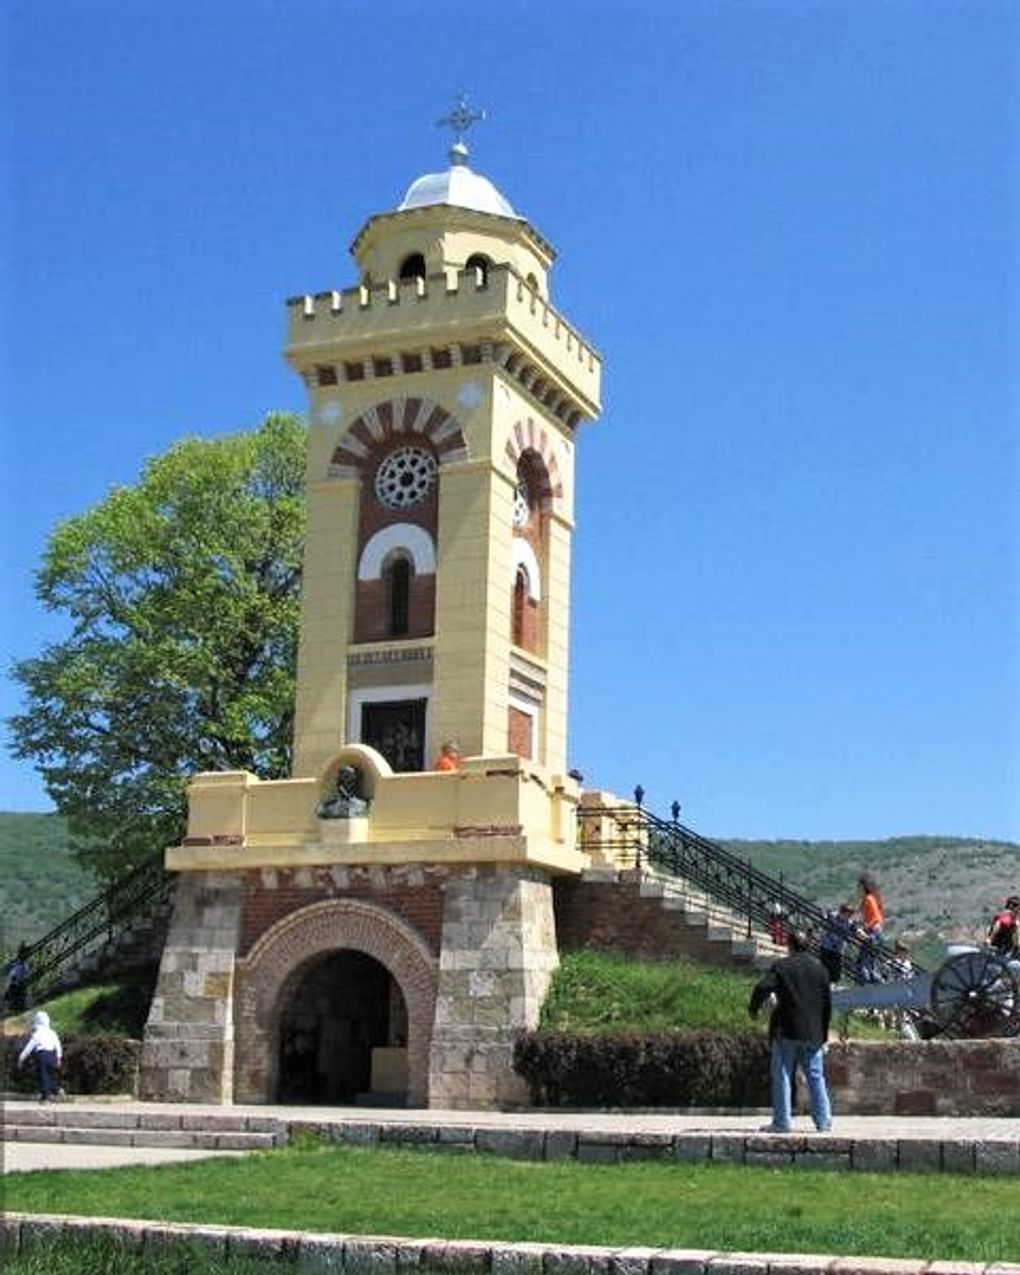 Монумент на горе Чегар у города Ниш, Сербия. Фотография: <a href="https://commons.wikimedia.org/w/index.php?curid=3300361" target="_blank" rel="noopener">commons.wikimedia.org</a>